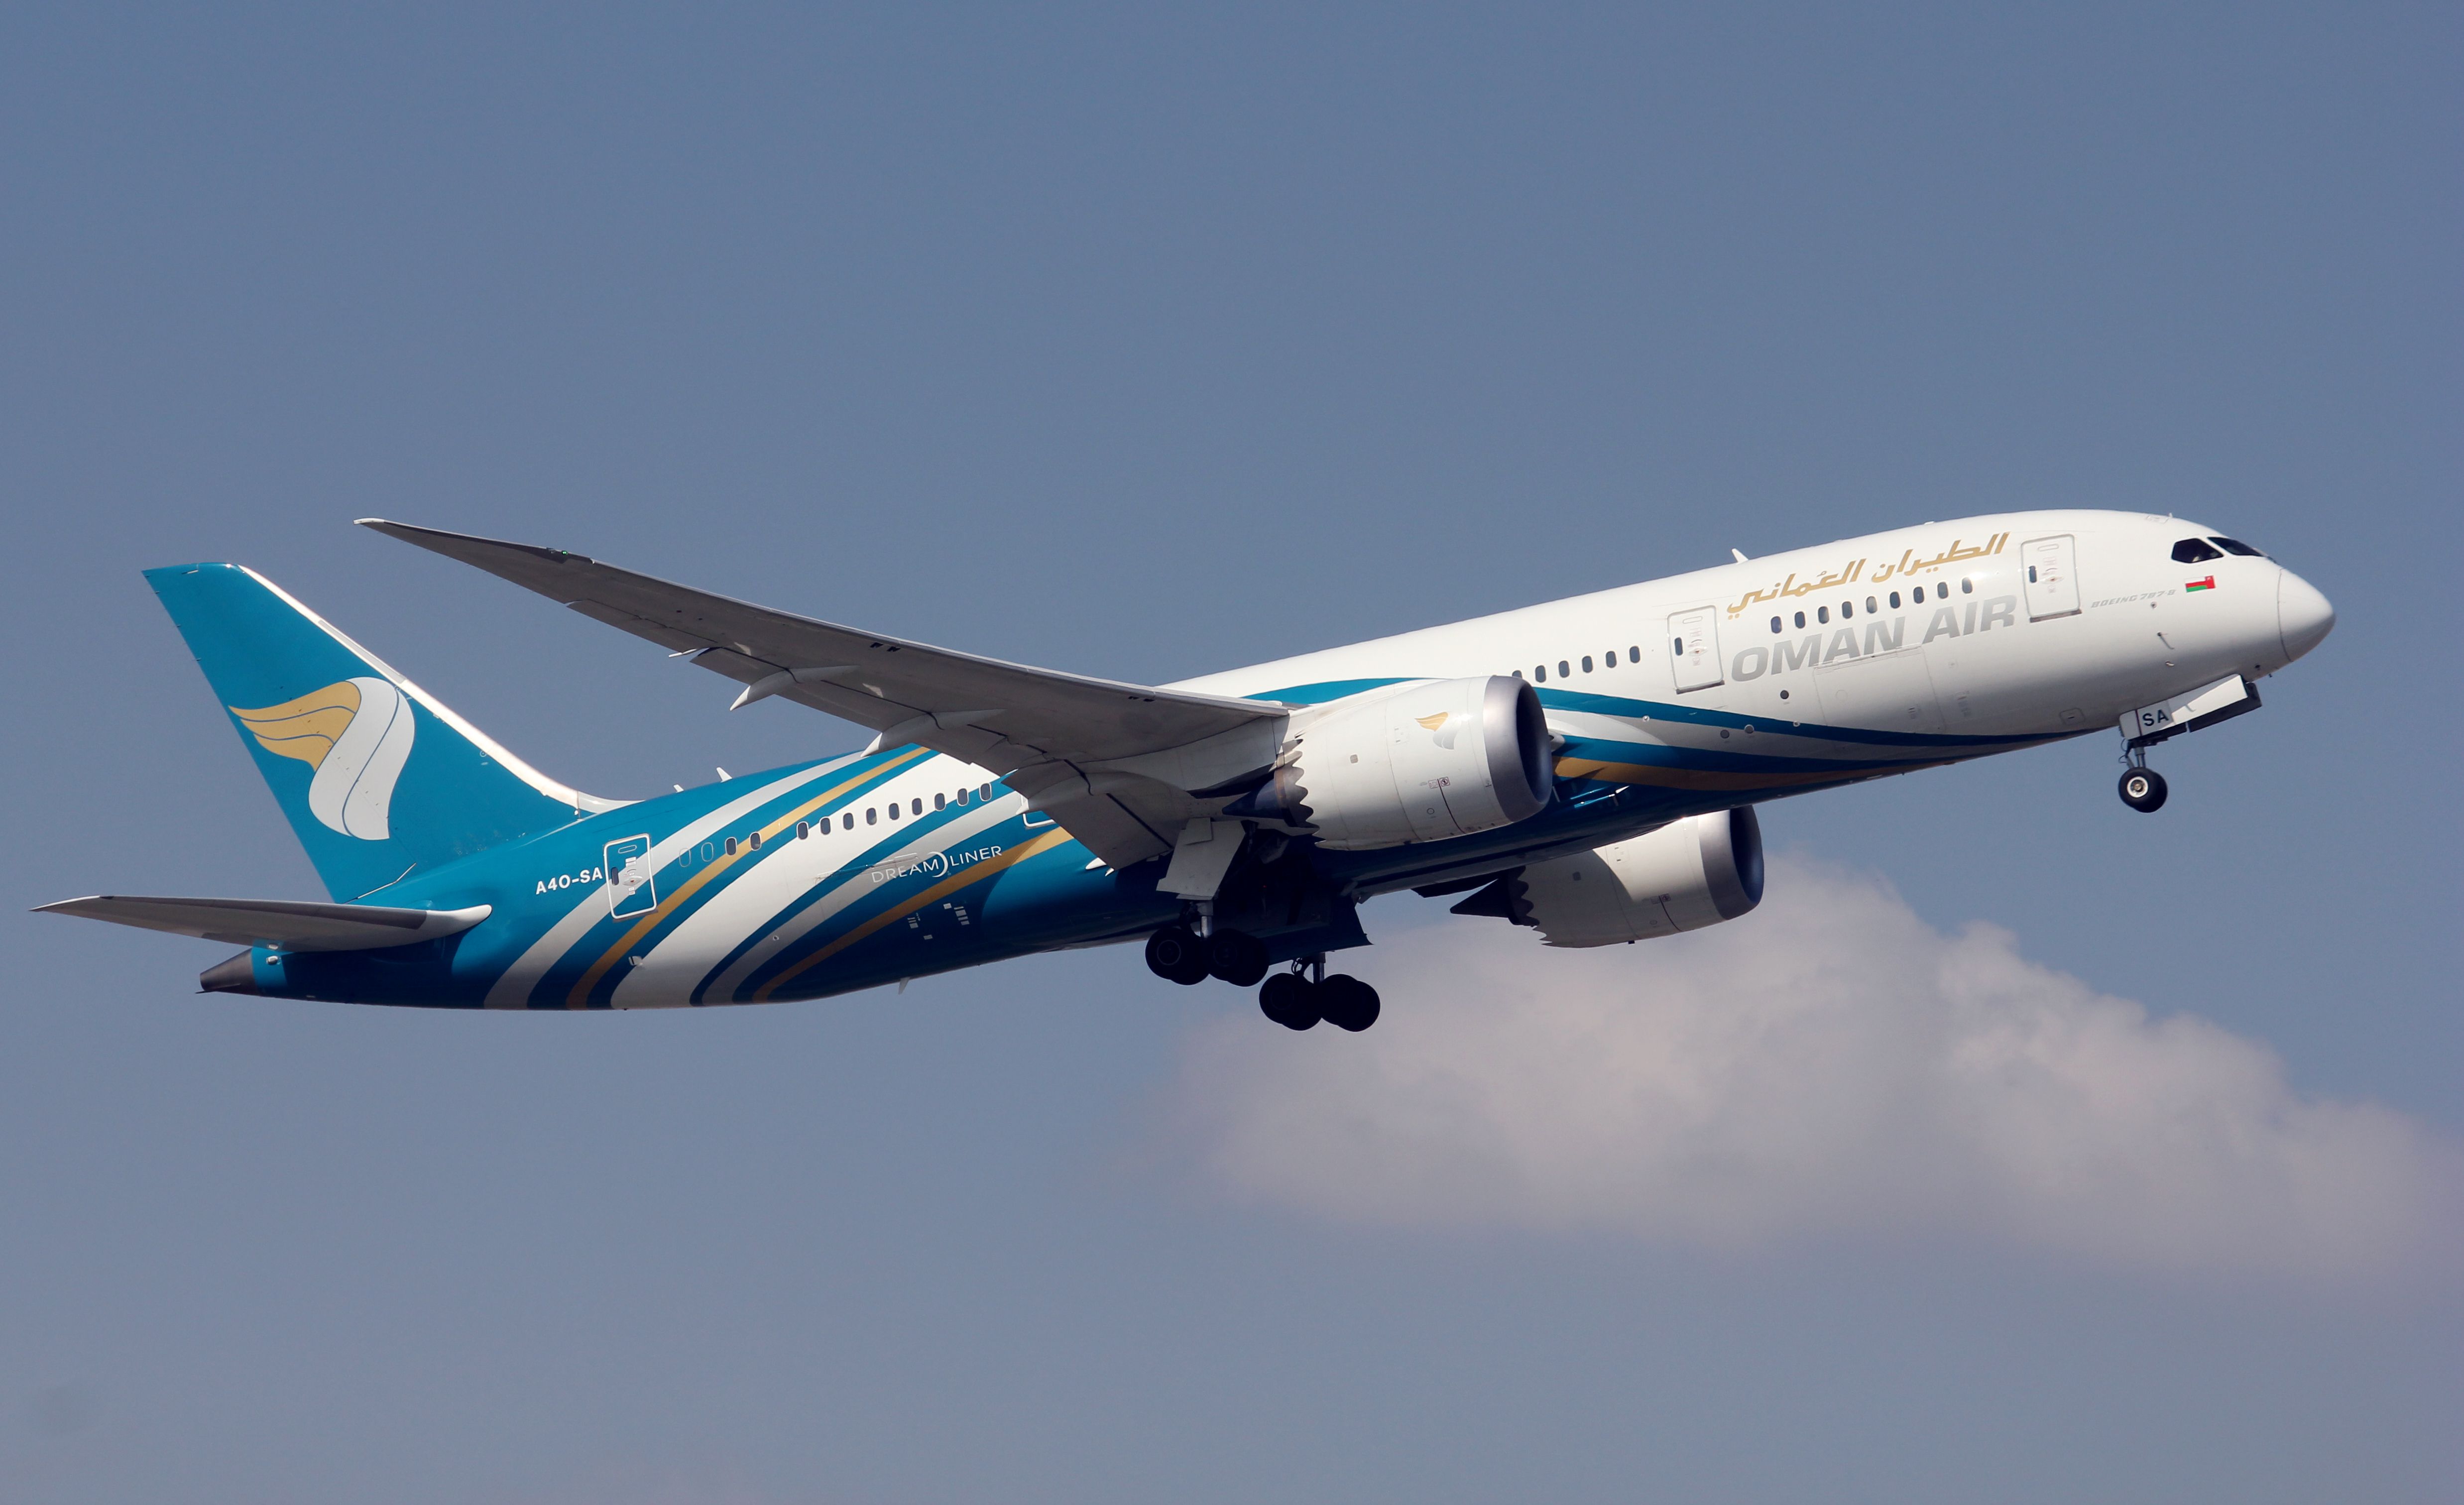 Oman Air 787 Dreamliner landing